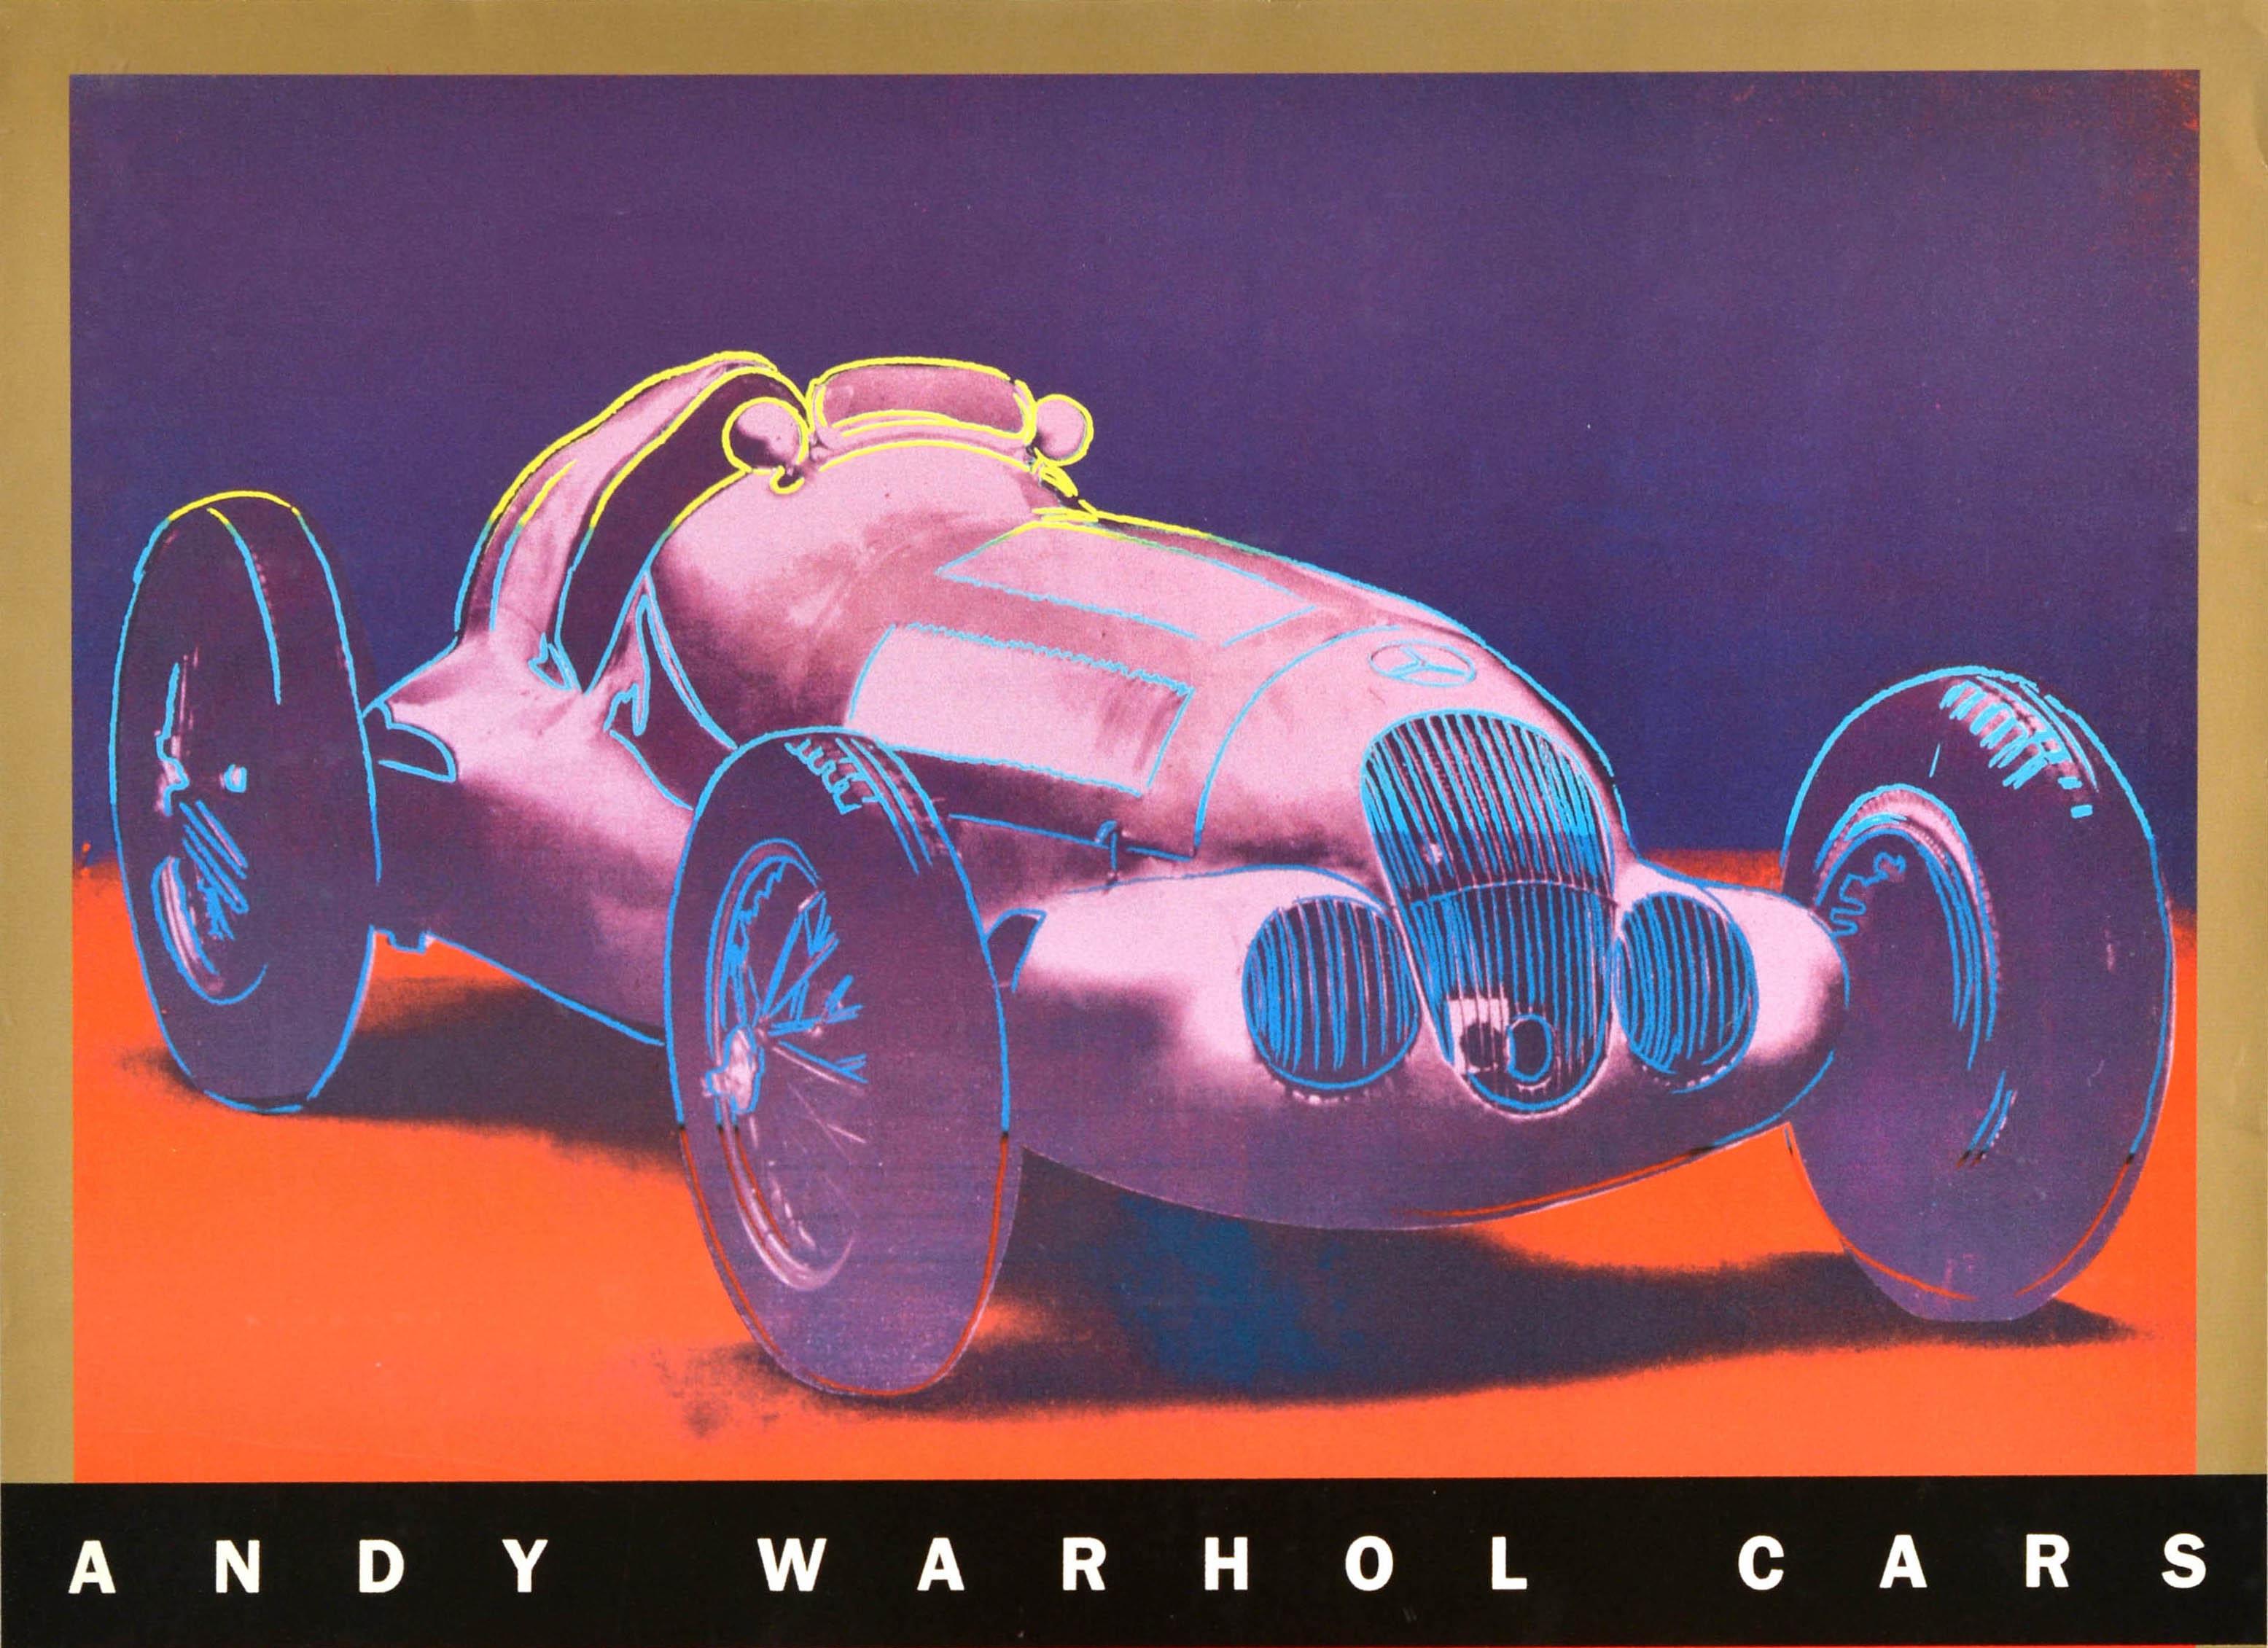 Original Vintage Advertising Poster Andy Warhol Cars Mercedes Benz Guggenheim For Sale 1